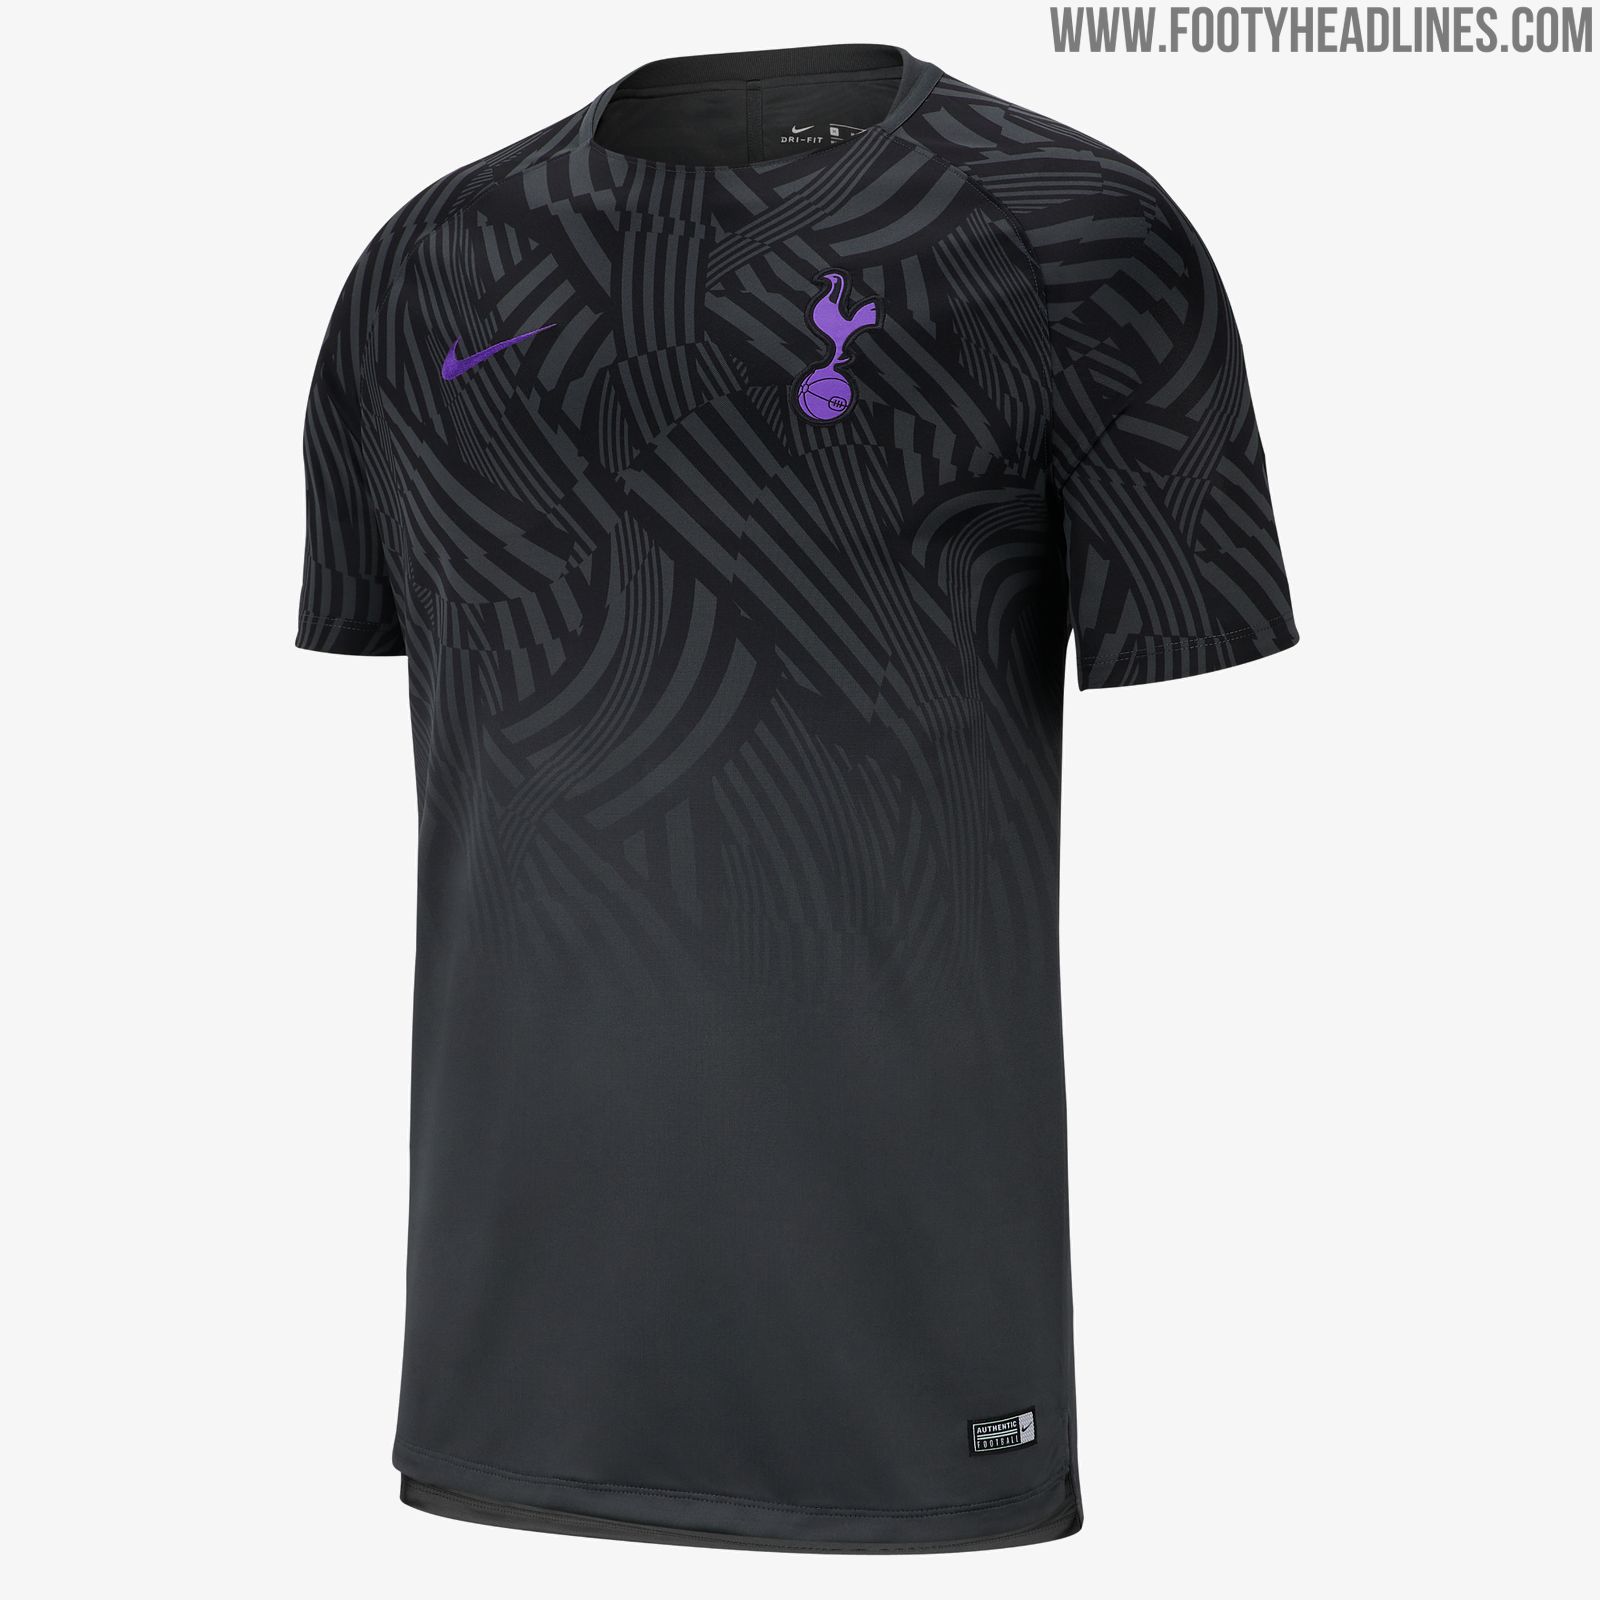 Nike Tottenham Hotspur 2019 Pre-Match & Training Shirts Revealed ...